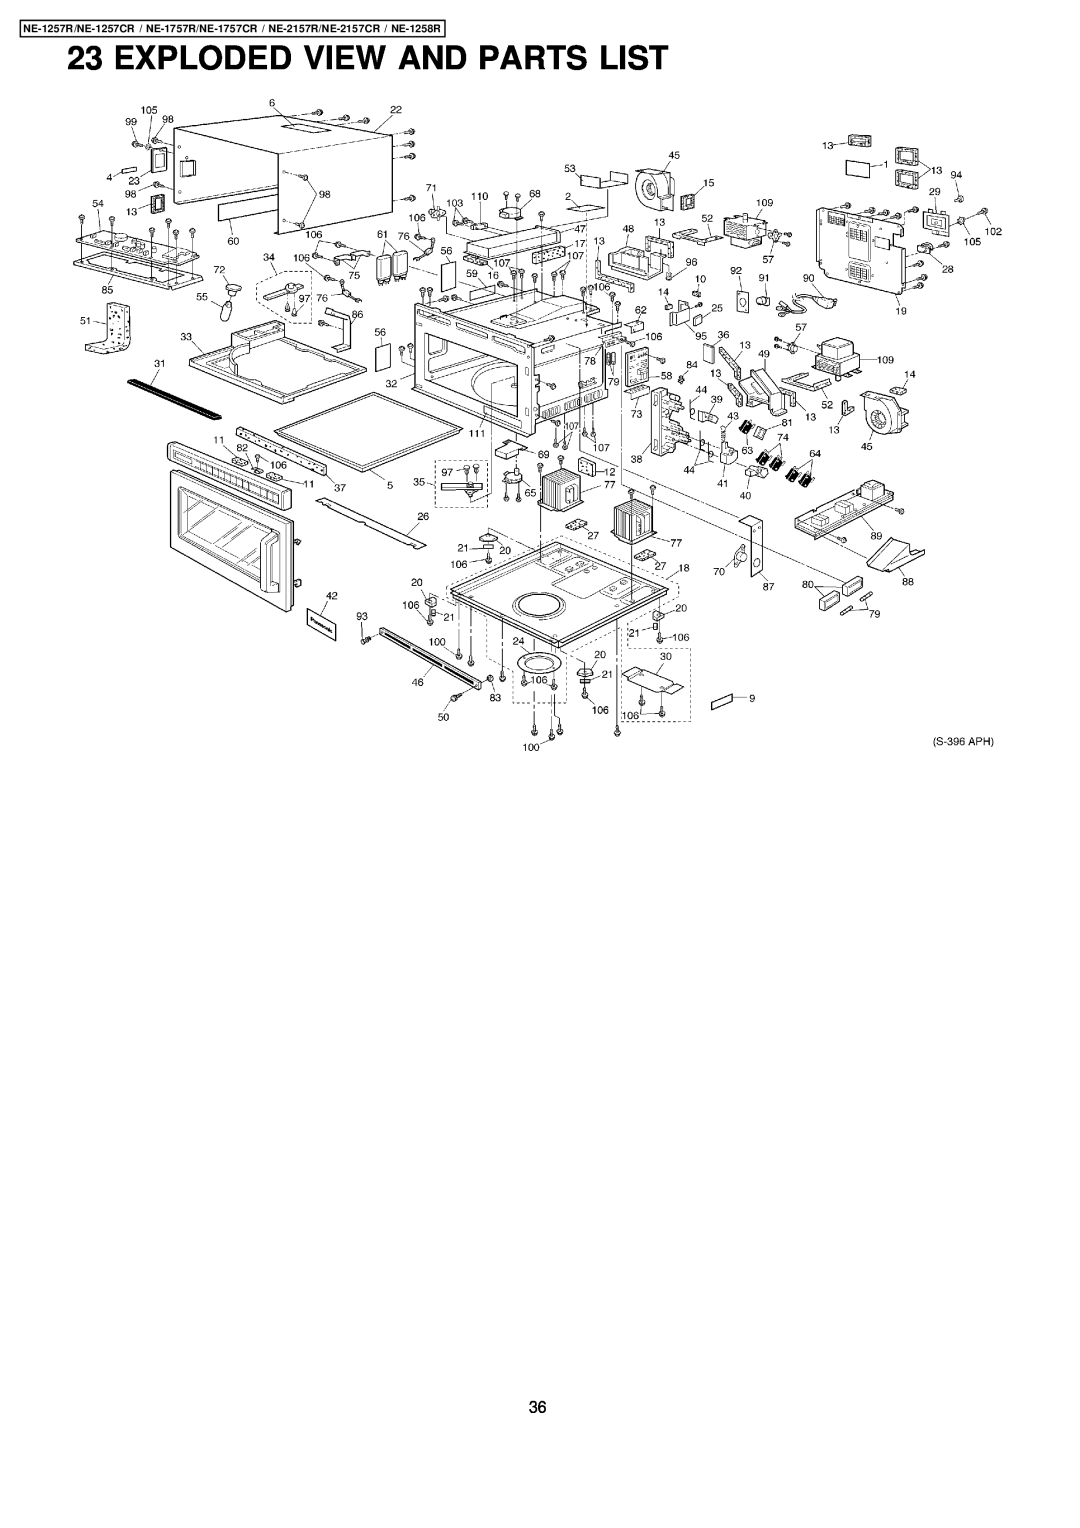 Panasonic NE-2157CR, NE-1757CR, NE-1257CR manual Exploded View And Parts List 